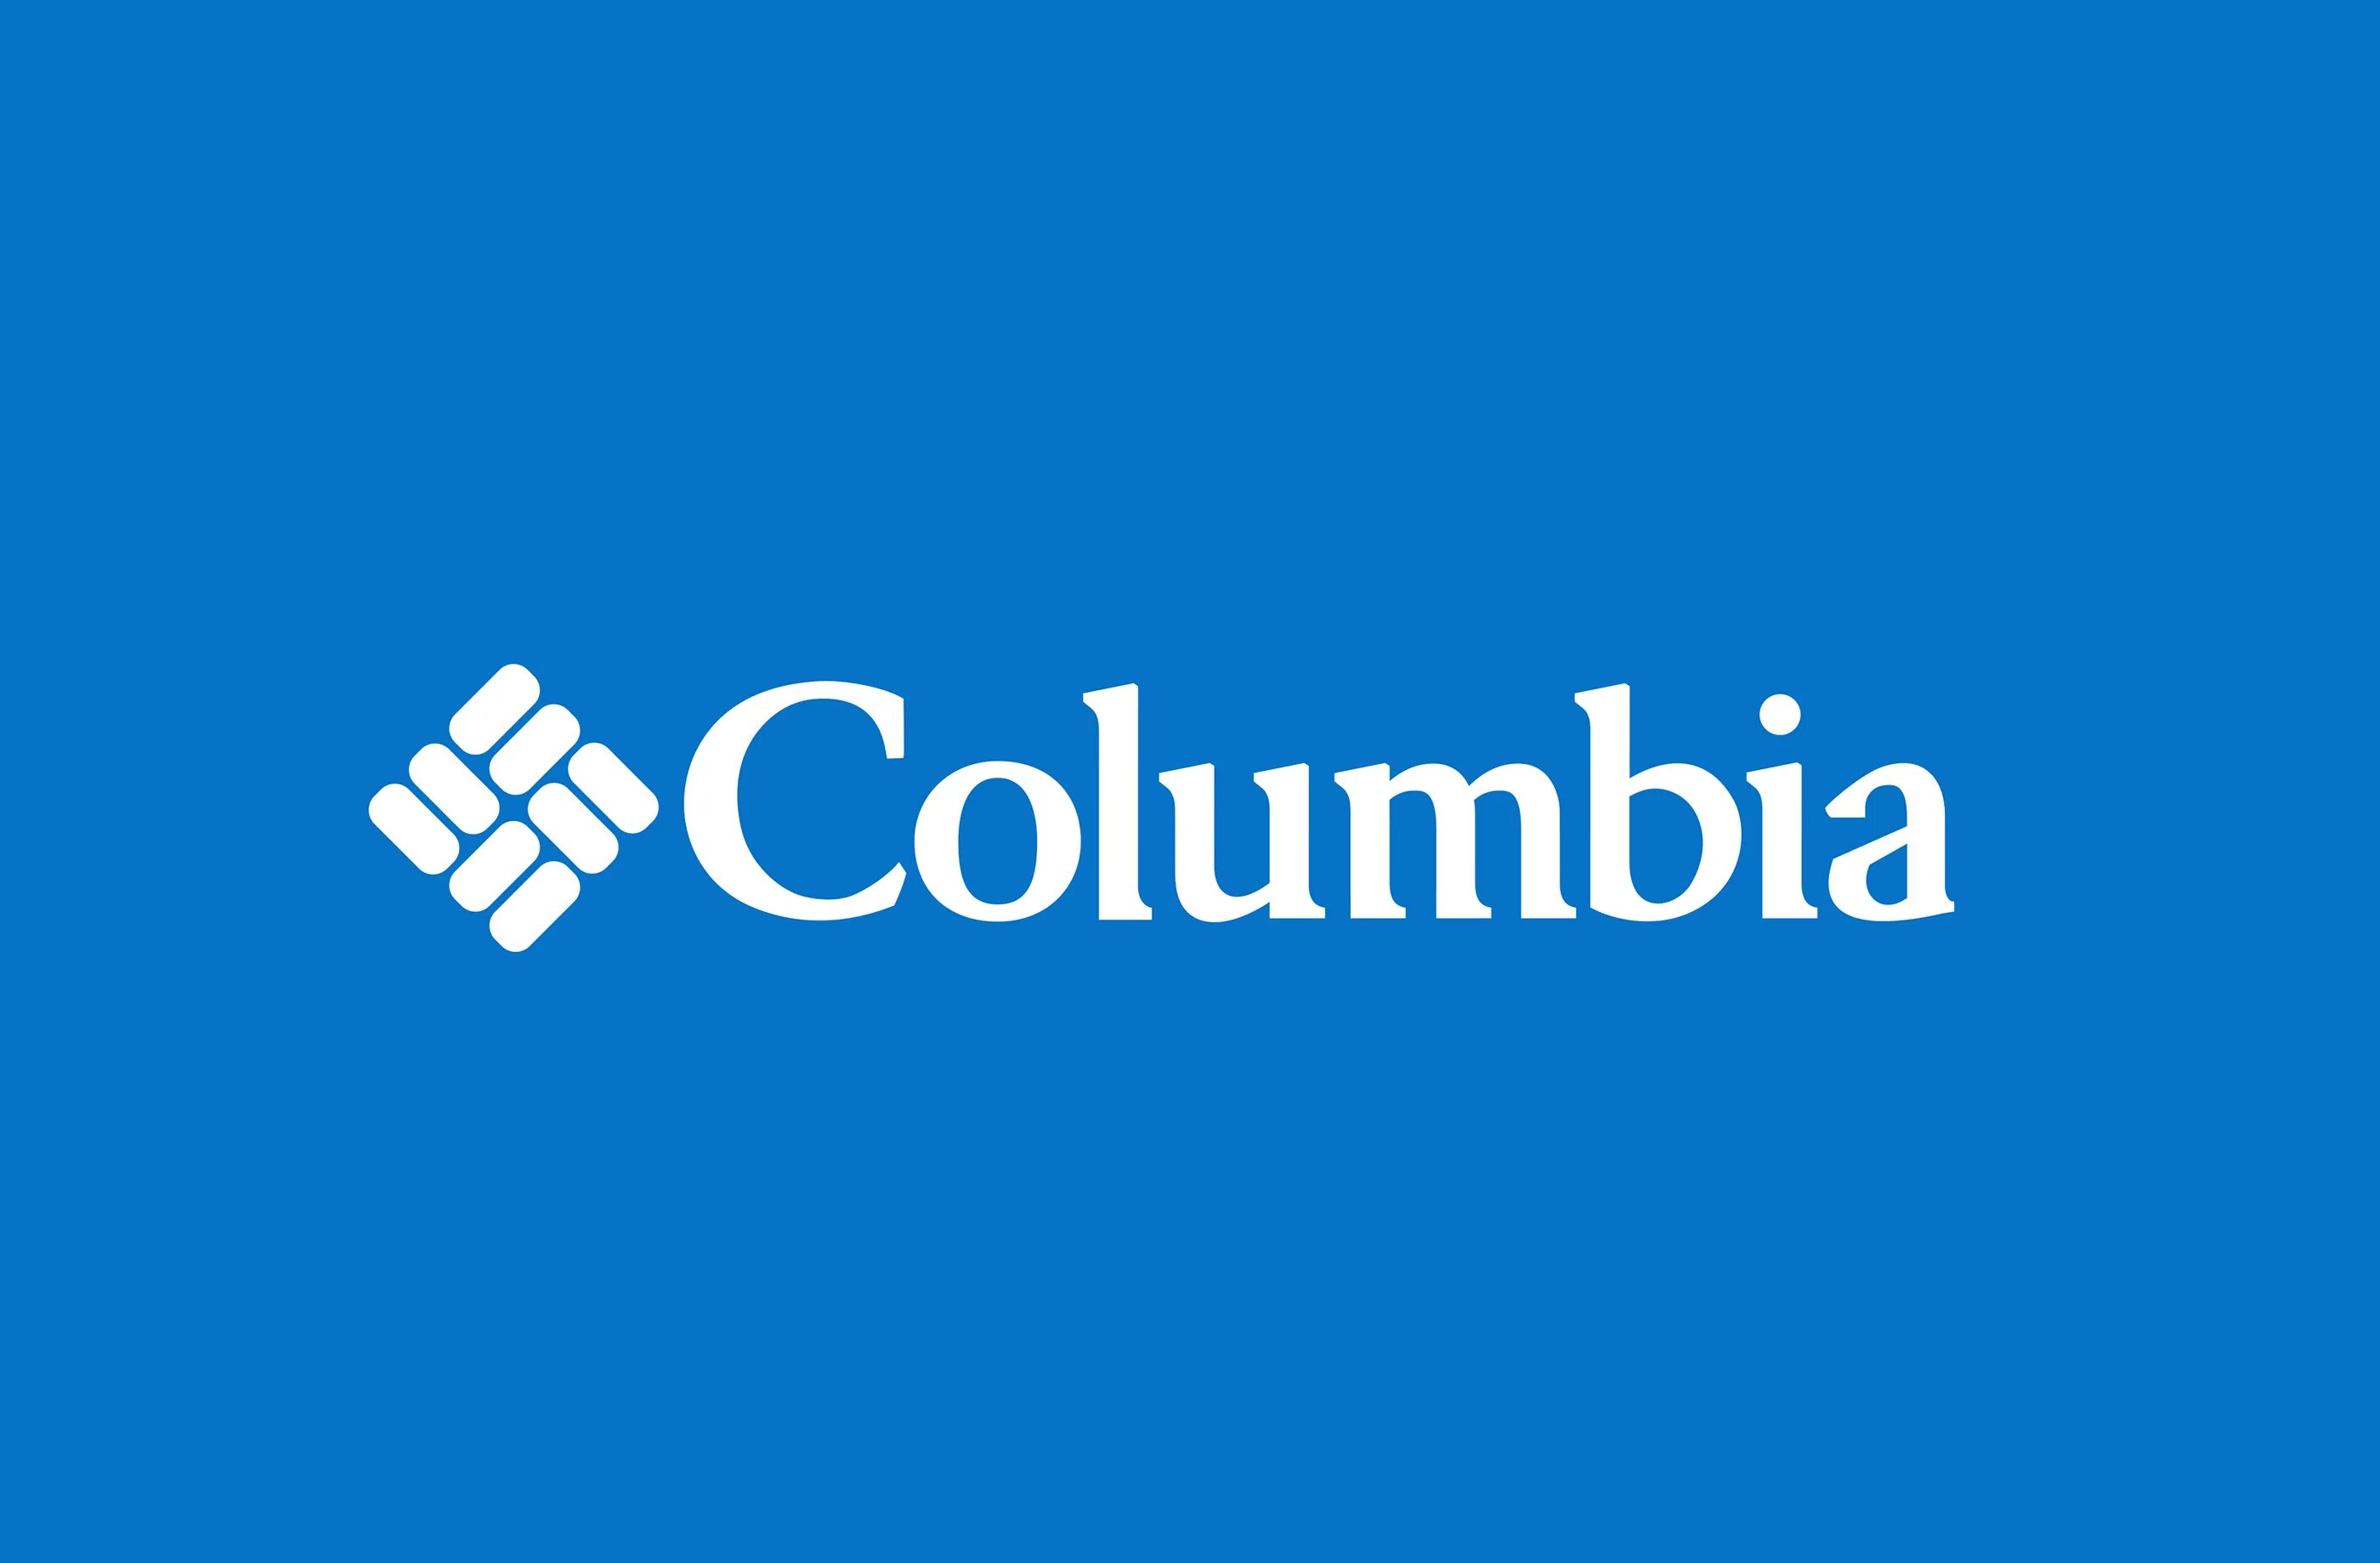 Columbia Sportswear Company лого. Логотип коламбия одежда. Надпись Columbia. Фирменный знак Columbia.